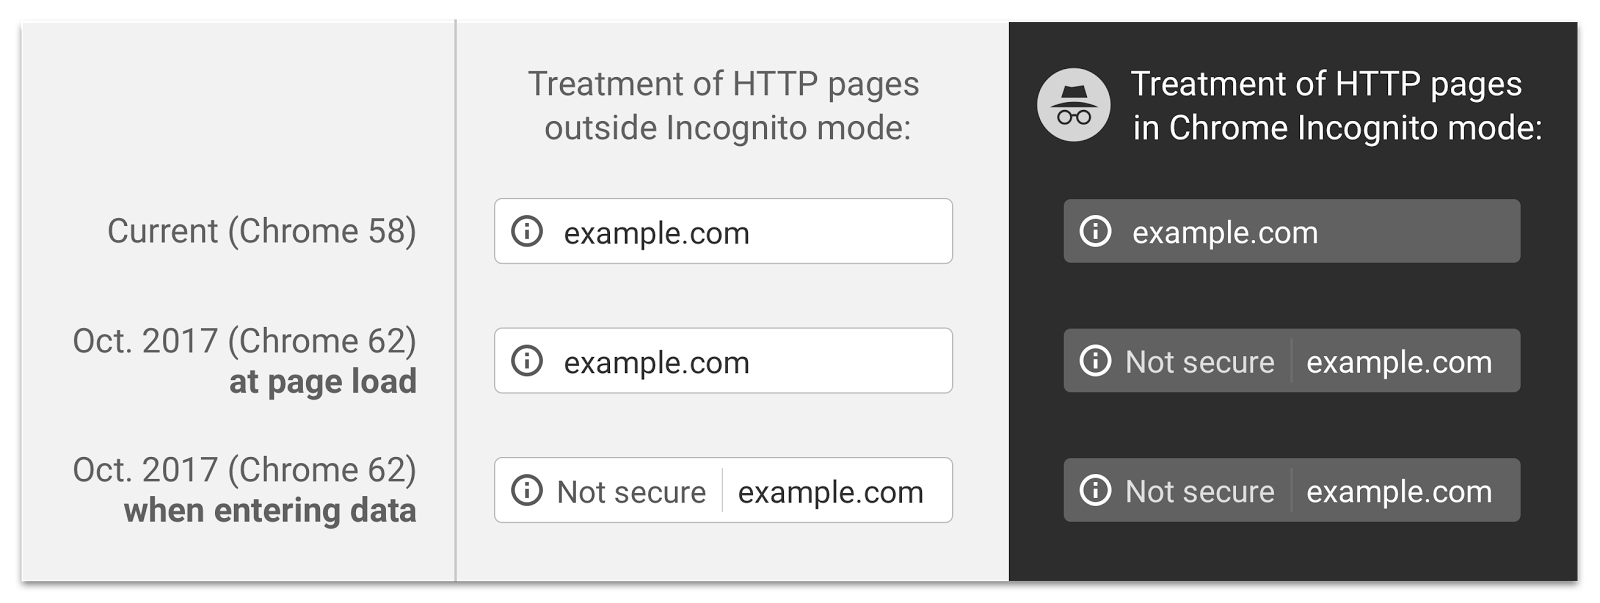 Example of how URLs will look after HTTPs update.